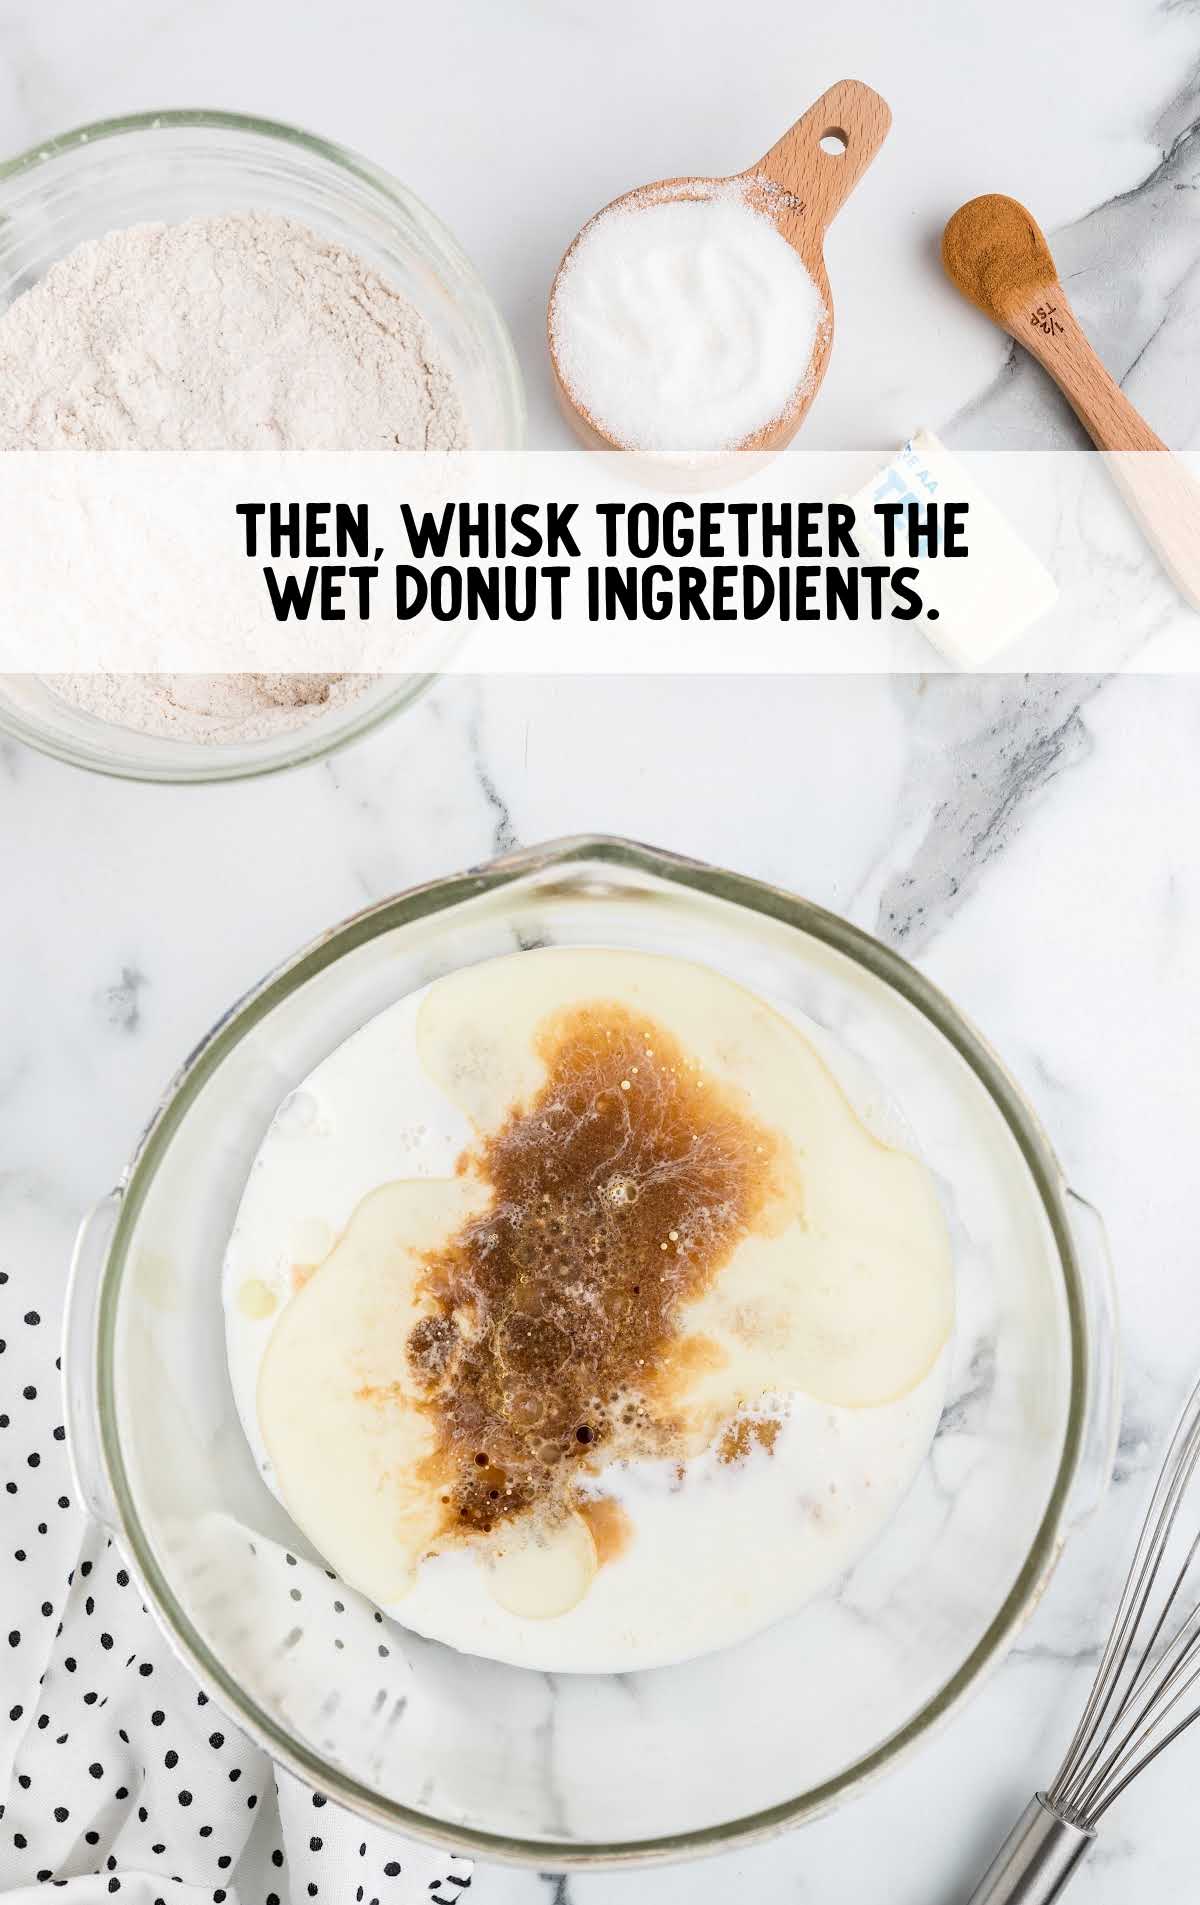 wet donut ingredients whisked together 